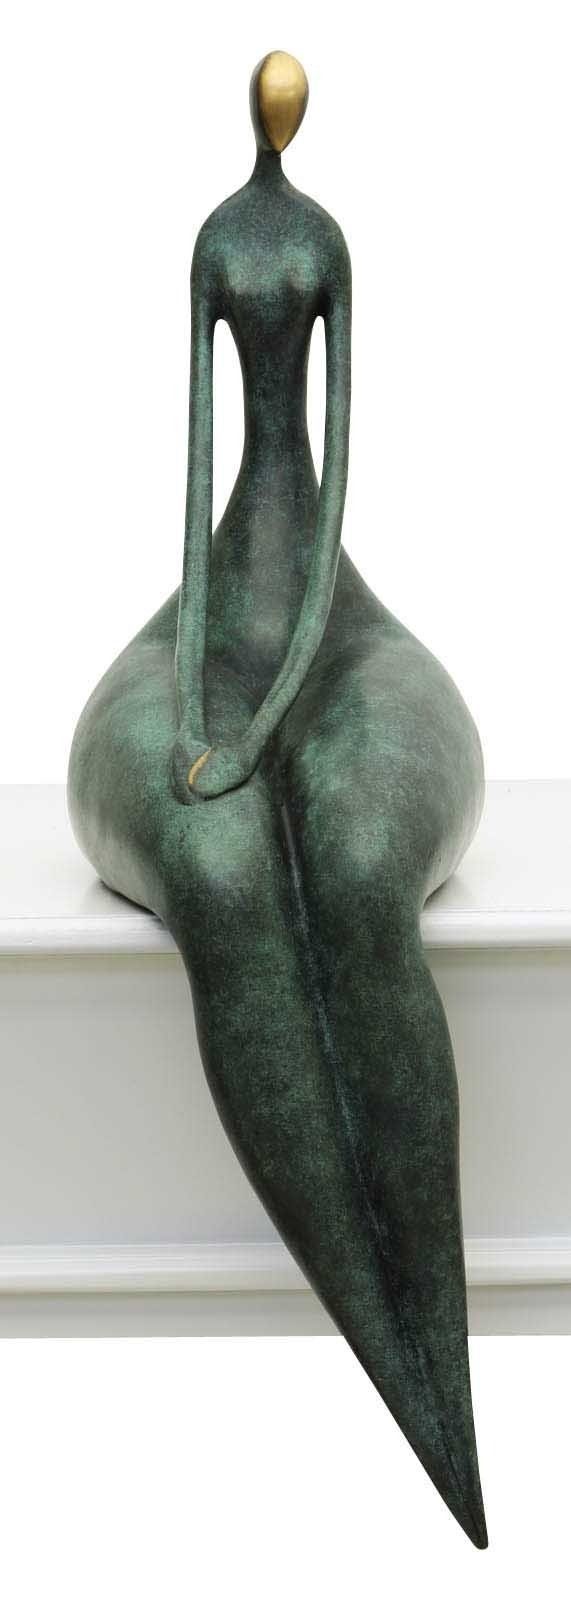 Aubaho Skulptur Bronzeskulptur Erotik Statue Frau Antik-Stil - Bronze 44cm Figur Akt